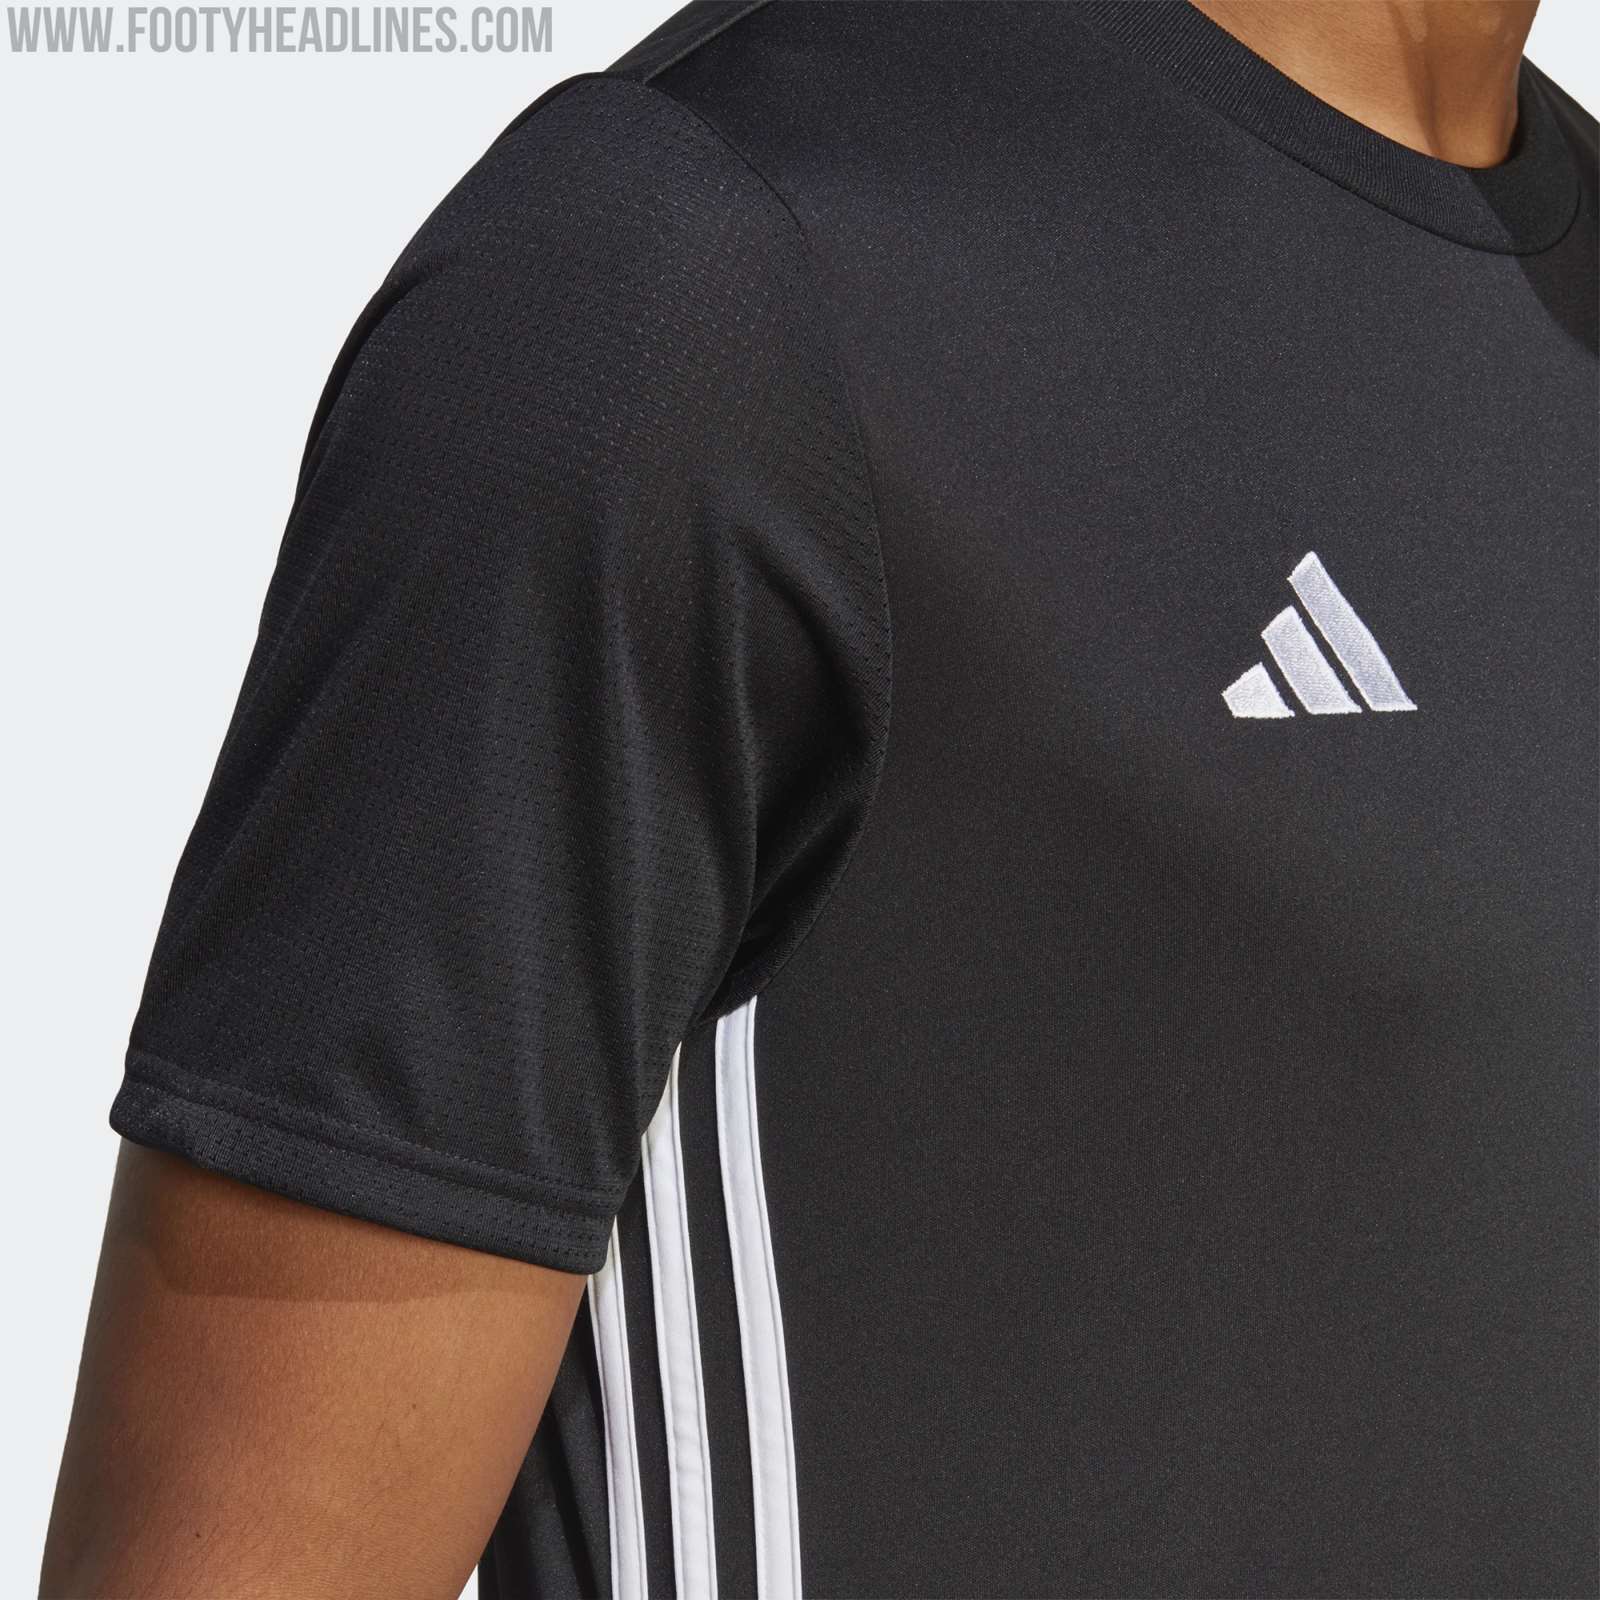 New Adidas Campeon 23 Teamwear Kit Leaked - 9 Colorways - Footy Headlines